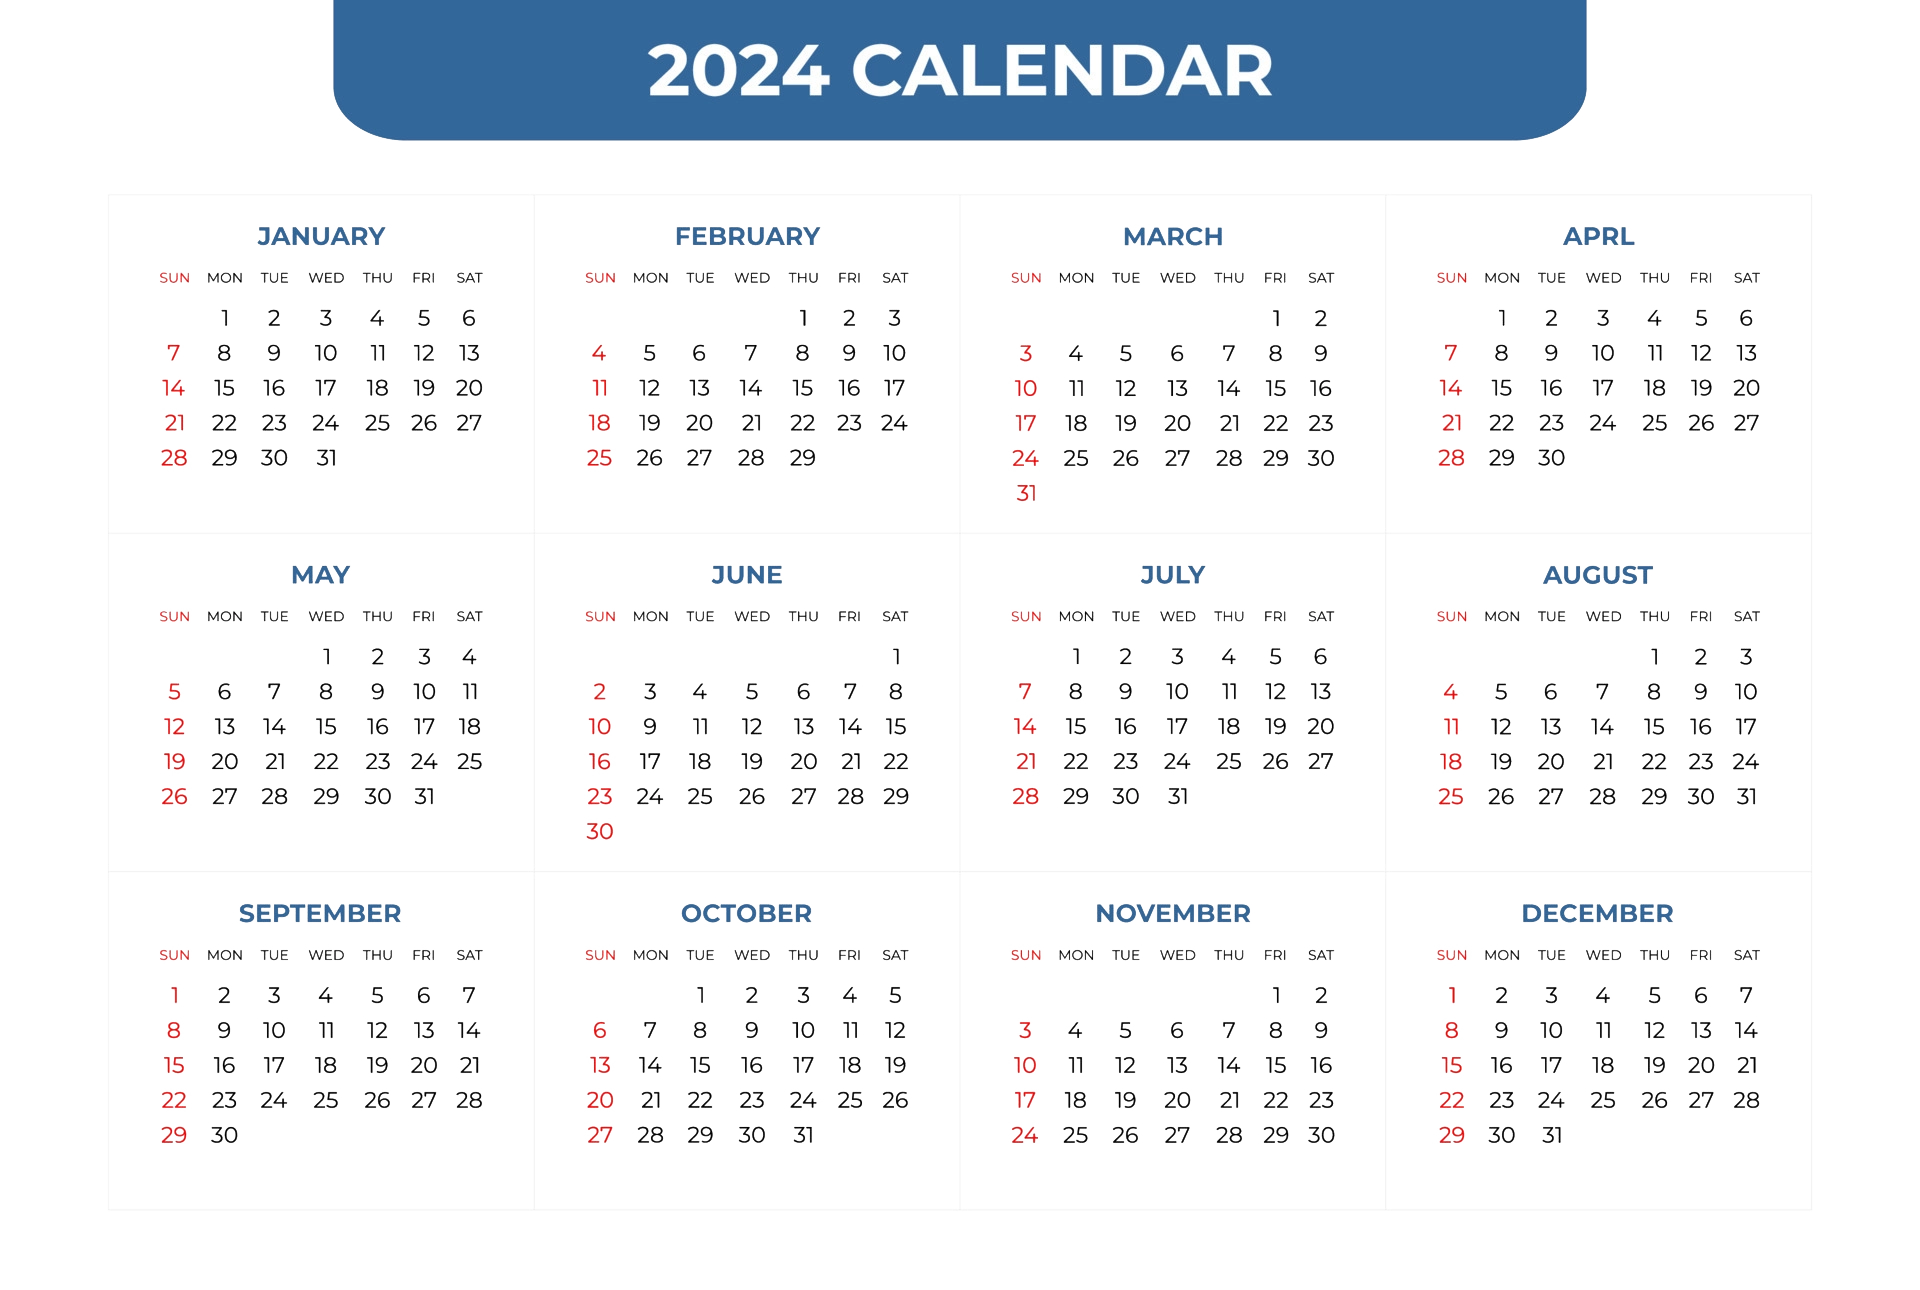 Calendar 2024 PNG Images Transparent Background PNG Play